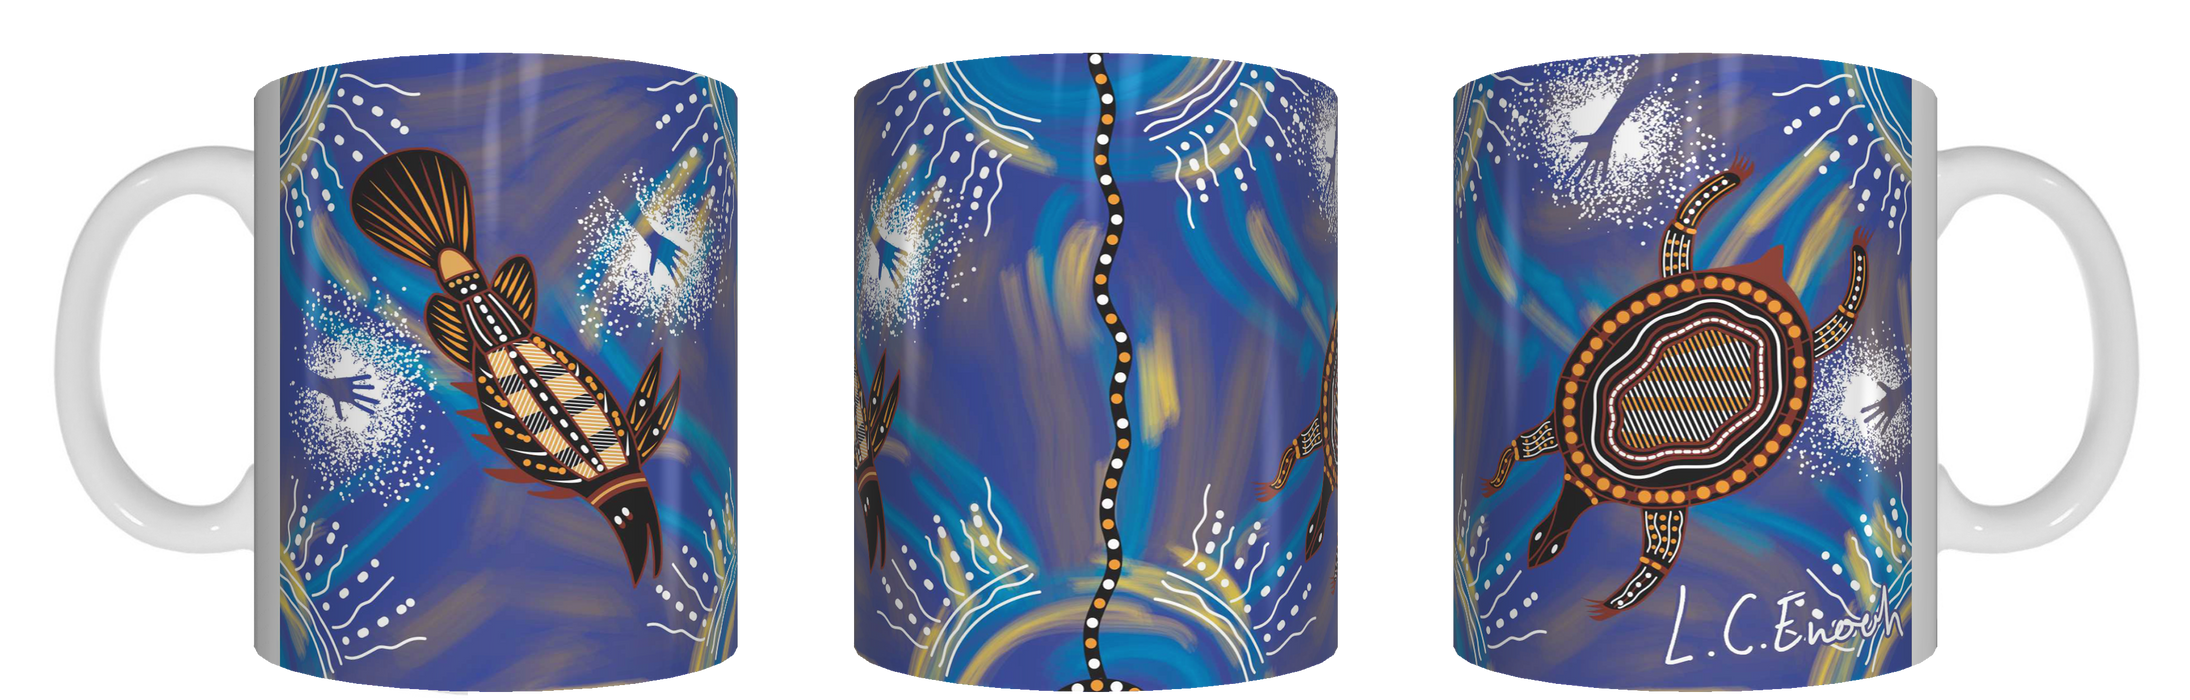 Meeting Place (Water) - Aboriginal Design Ceramic Mug in Gift Box